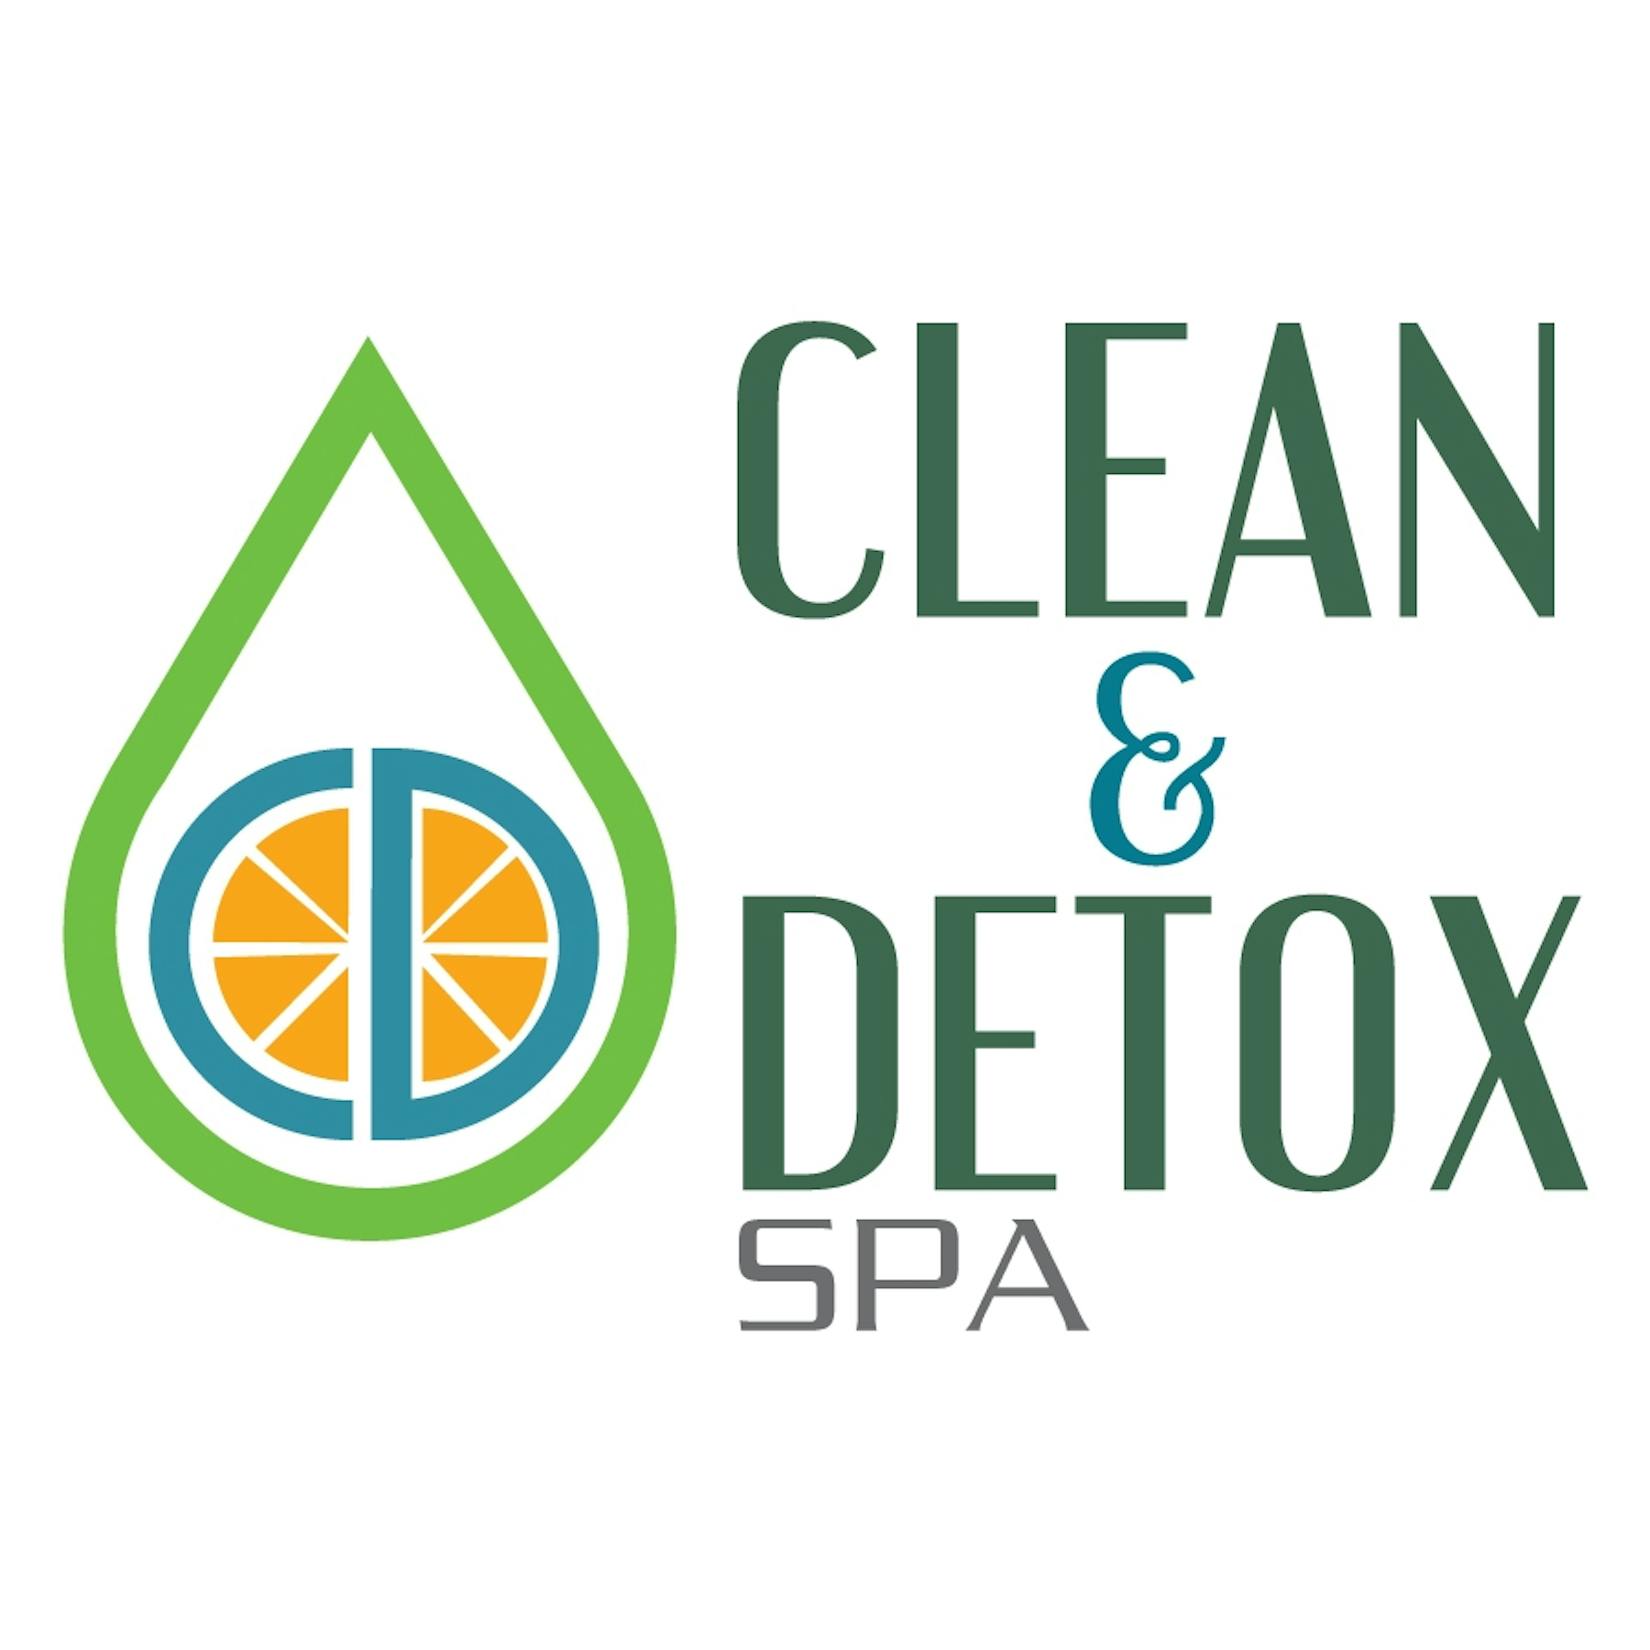 Clean & Detox SPA | Beauty